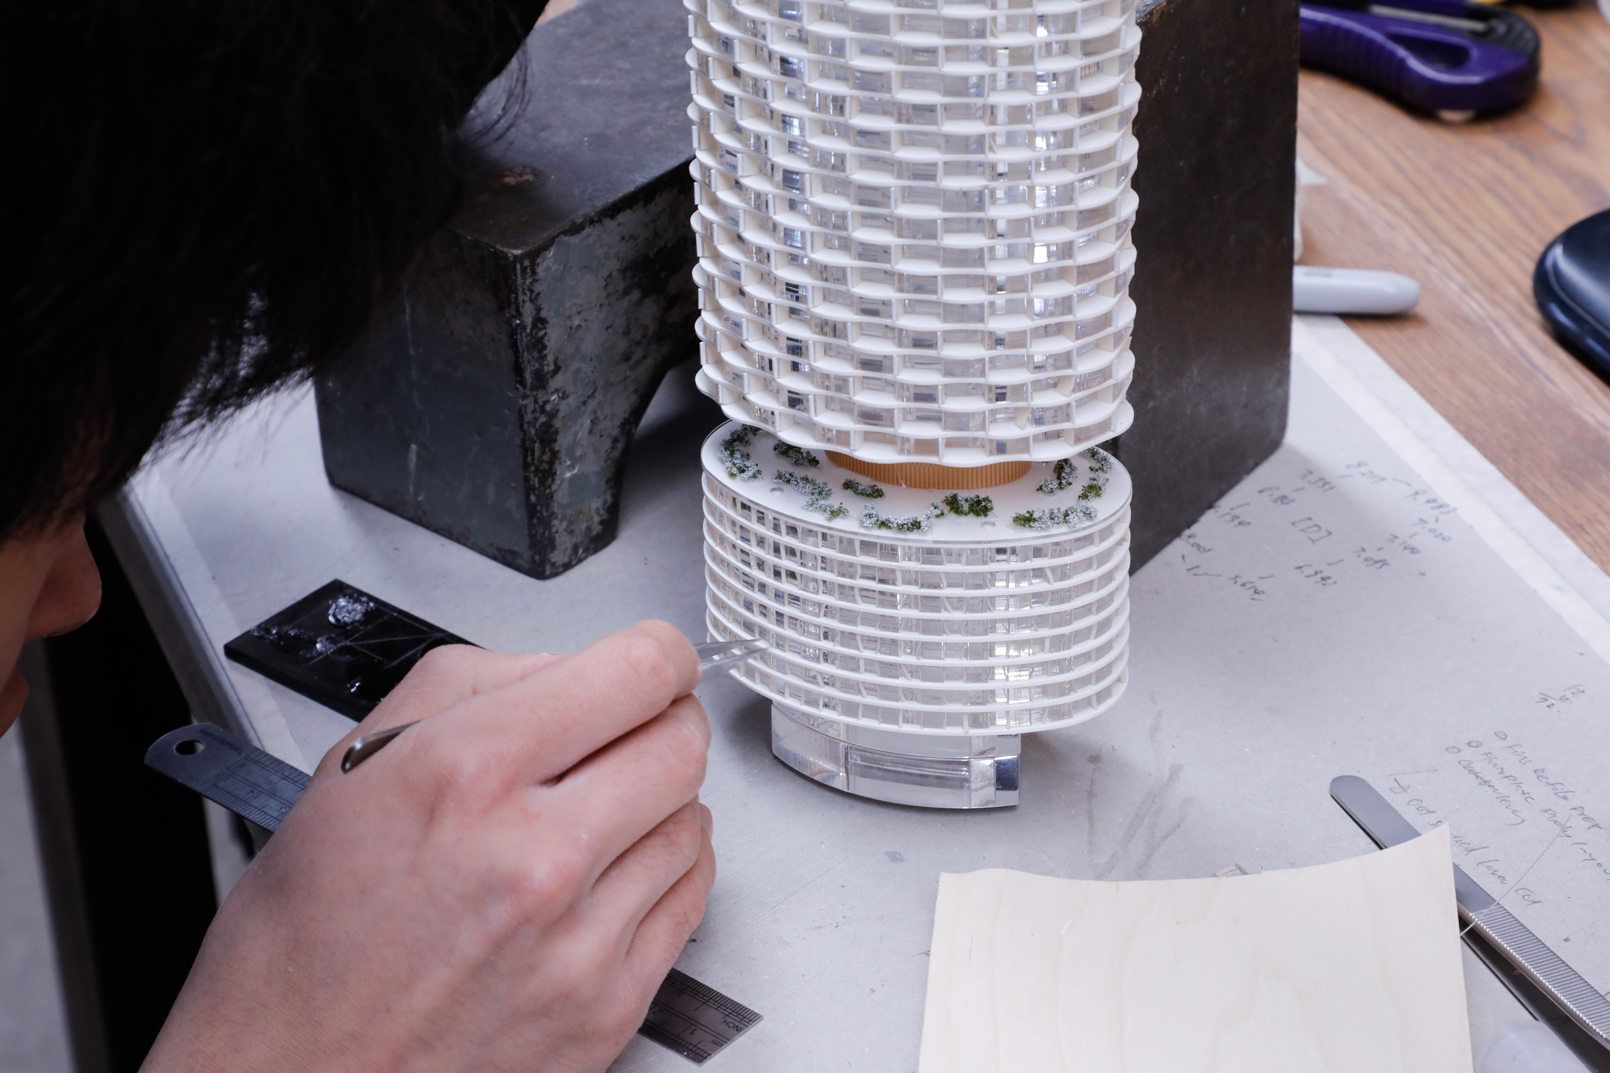 Compeition Model for Crone amd Kohn Pedersen Fox Associates at 1-500 using white acrylic tower depicting 338 Pitt Street